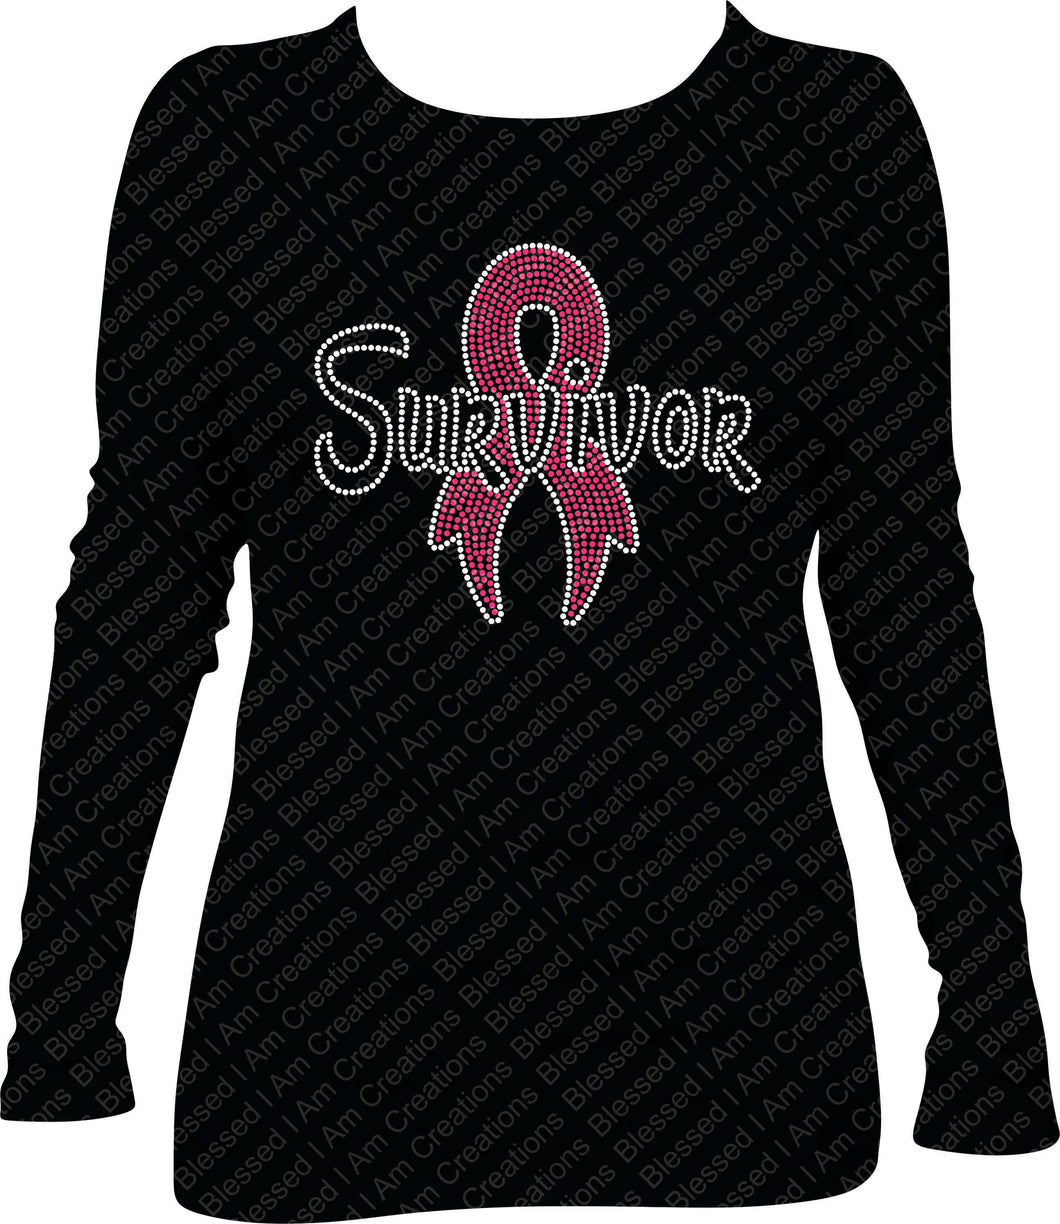 Survivor Rhinestone Shirt, Long Sleeve Survivor Awareness Shirt